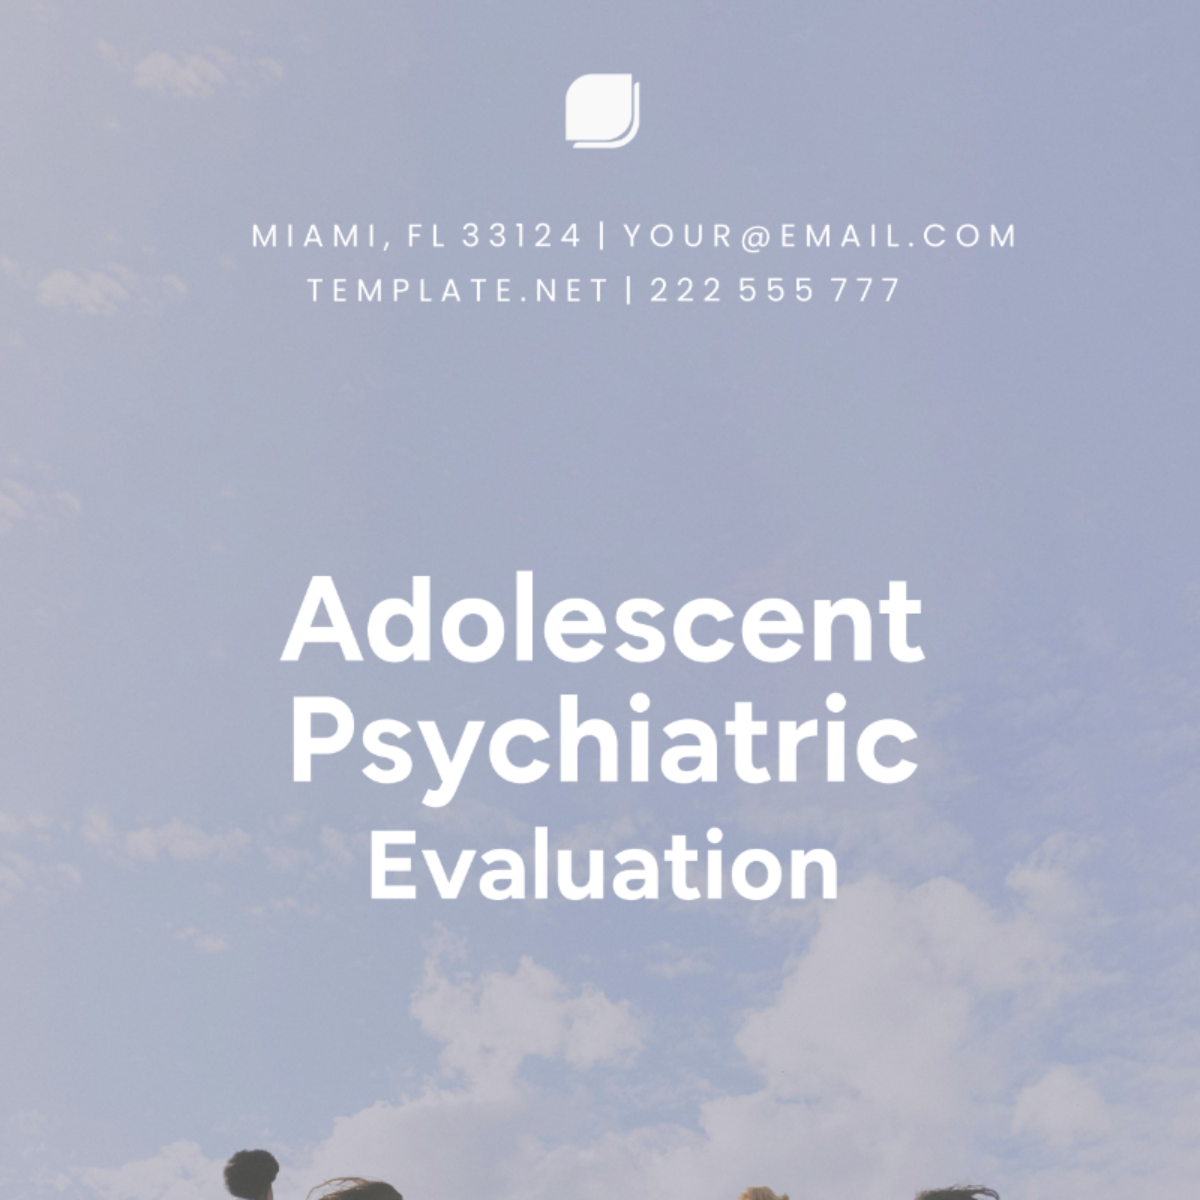 Adolescent Psychiatric Evaluation Template